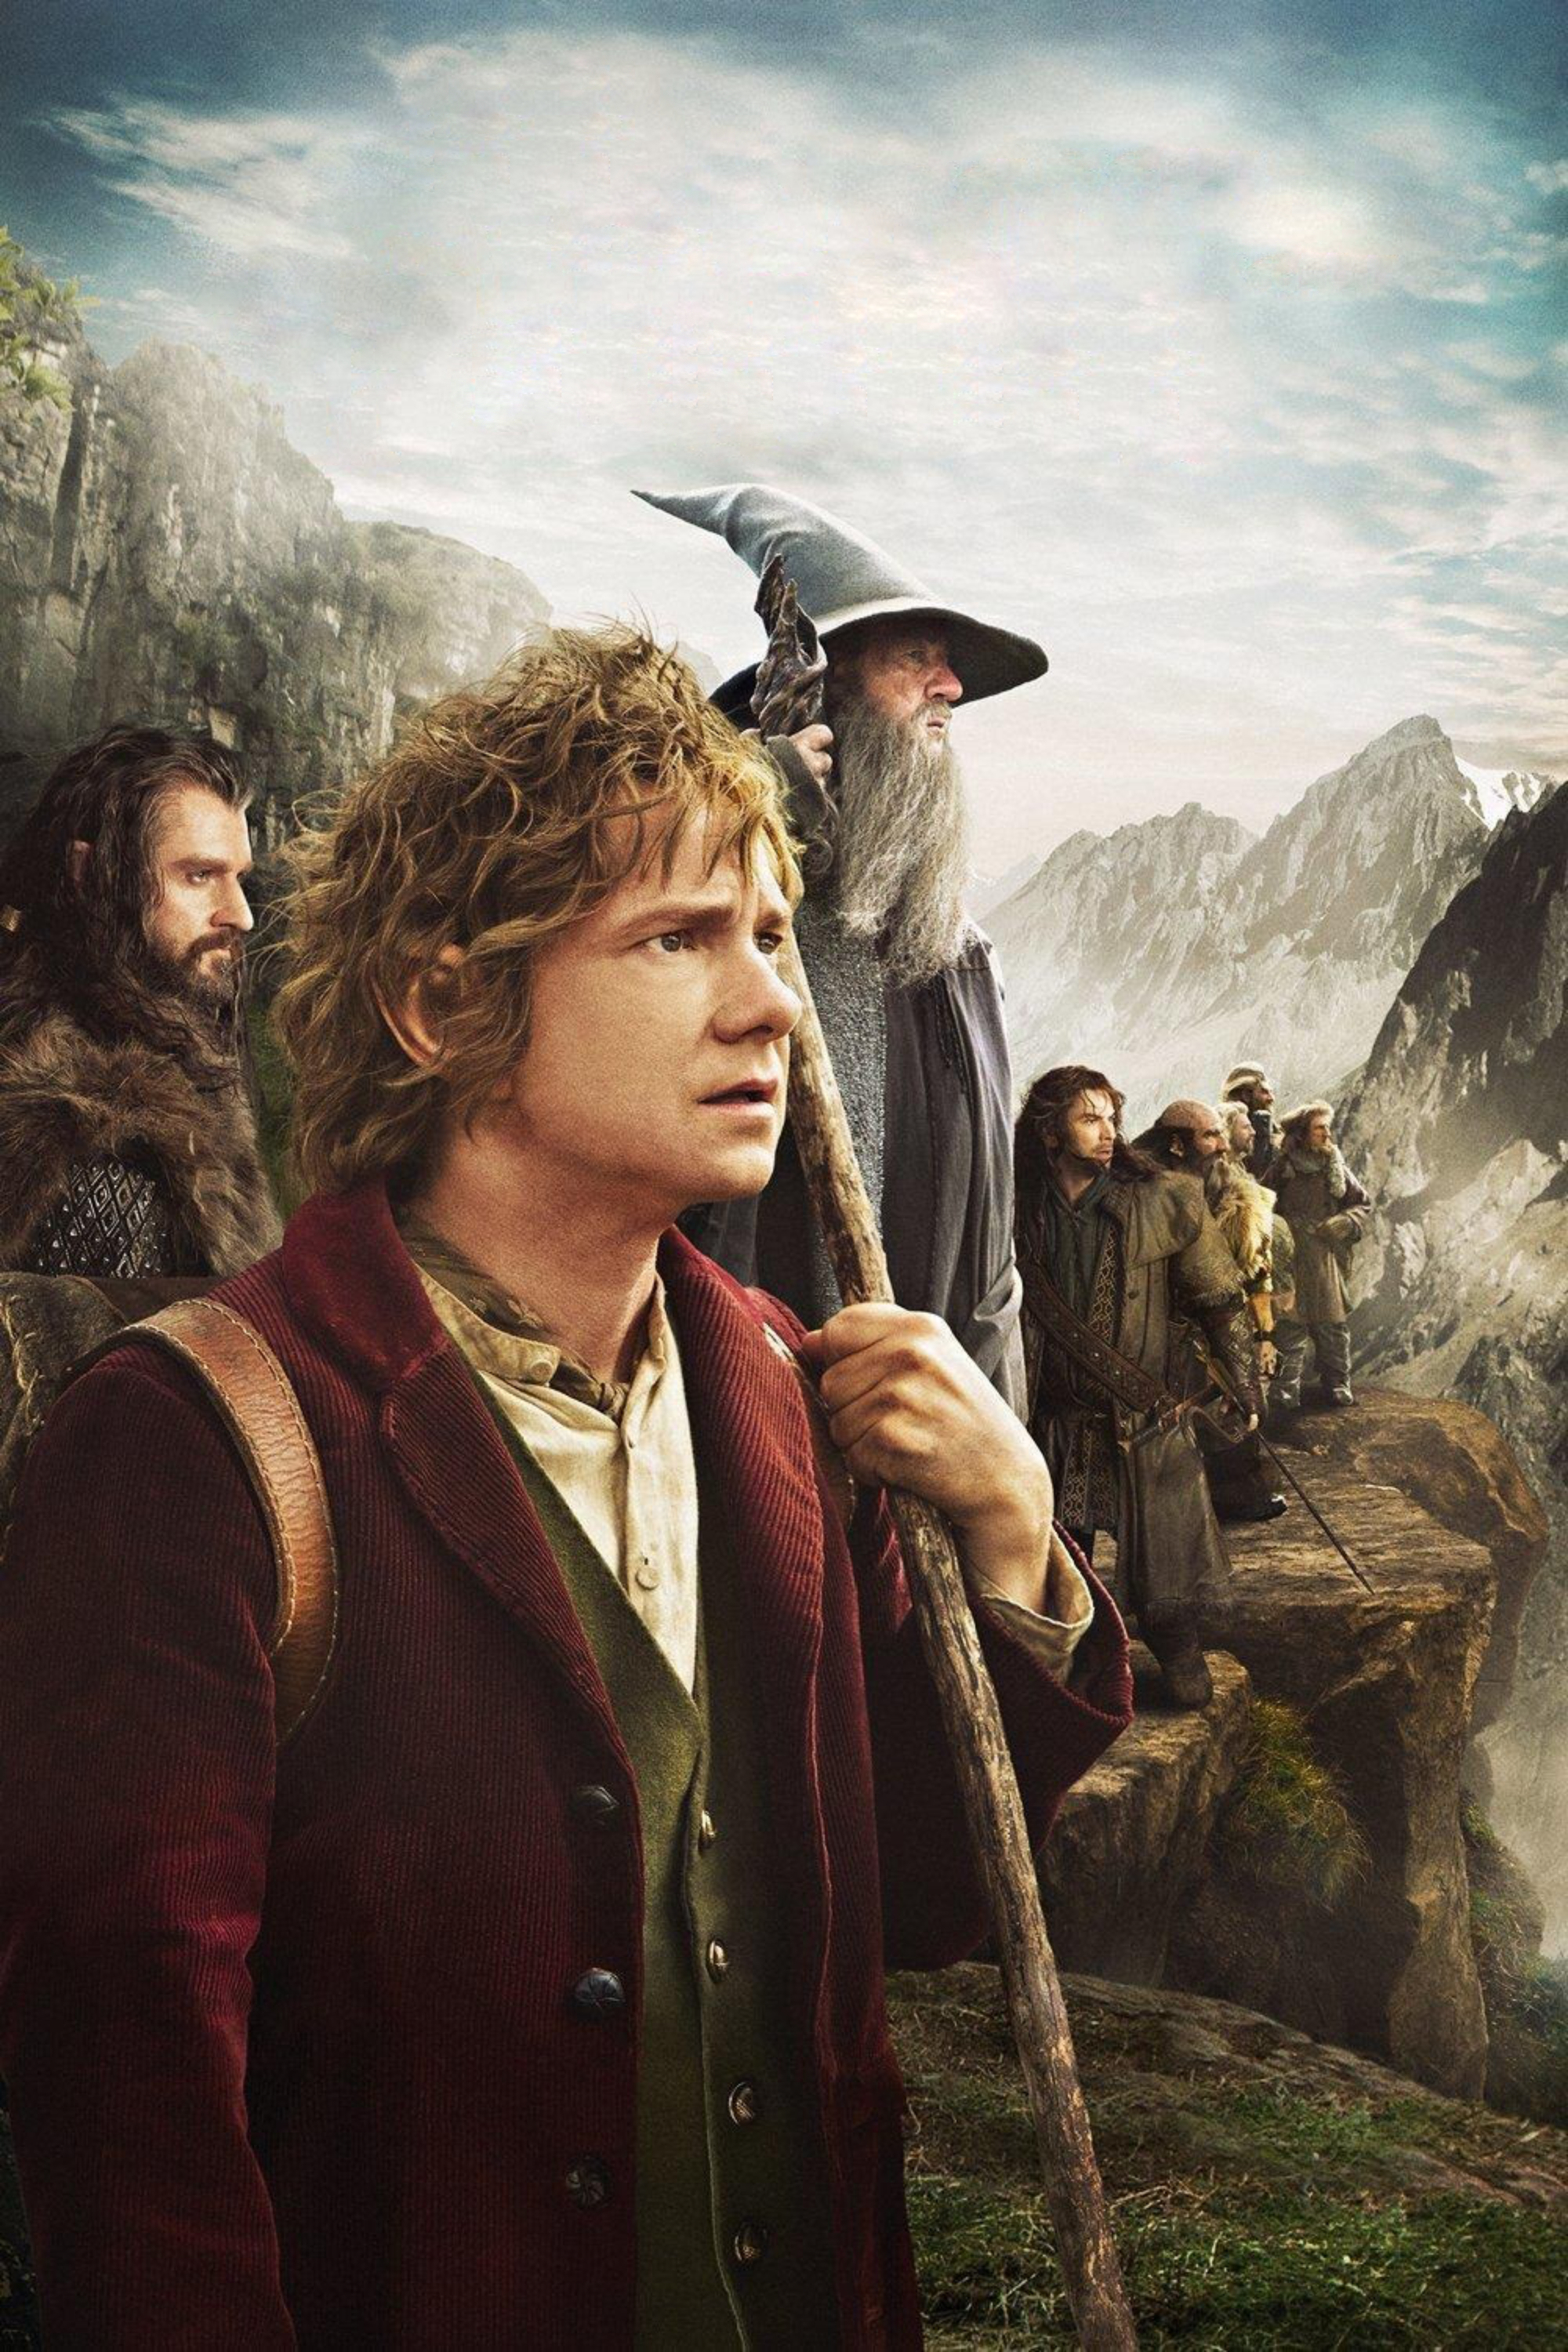 Hobbit 1 An Unexpected Journey [2012] (2) by KahlanAmnelle on DeviantArt